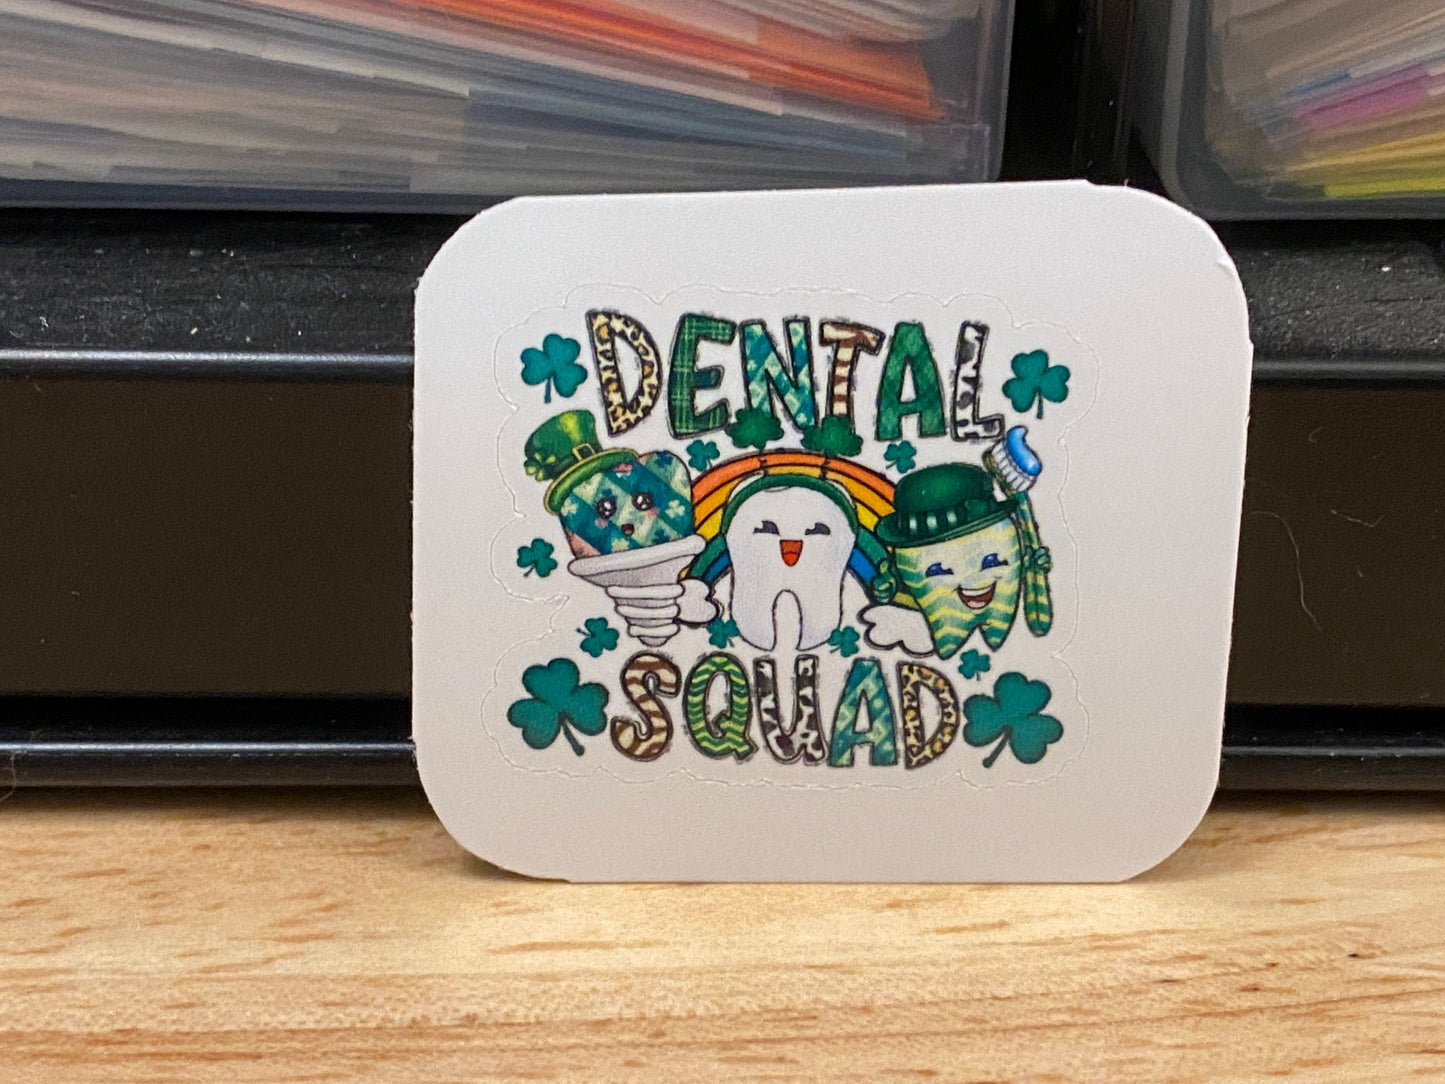 Dental Squad Sticker, Dental Sticker, Medical STICKER, Cute Medical Design Sticker, Dental nurse sticker